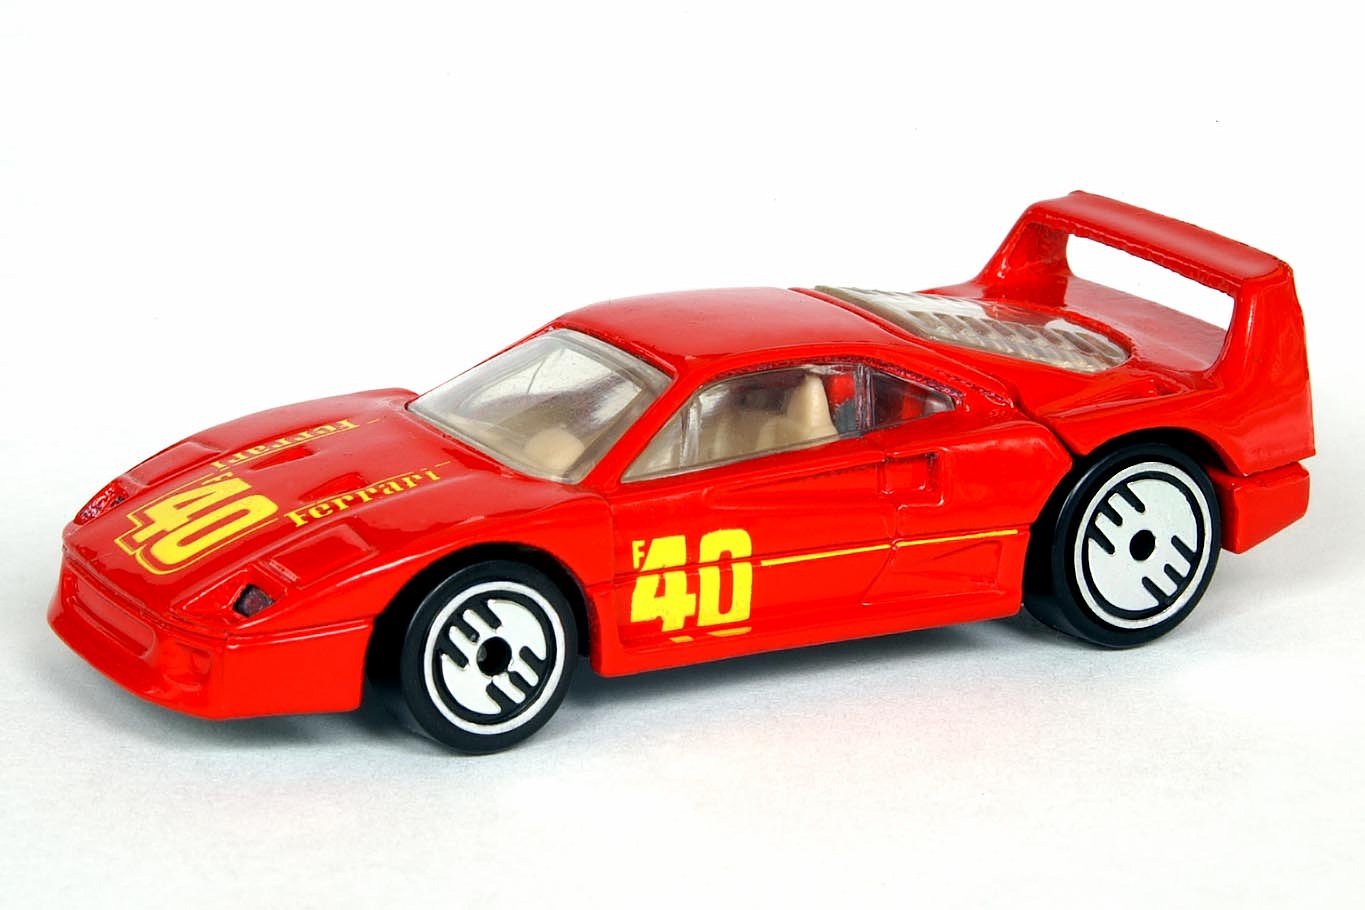 69 diecast car 1/64 scale blue carded 1991 Mattel HOT WHEELS No Ferrari F40 